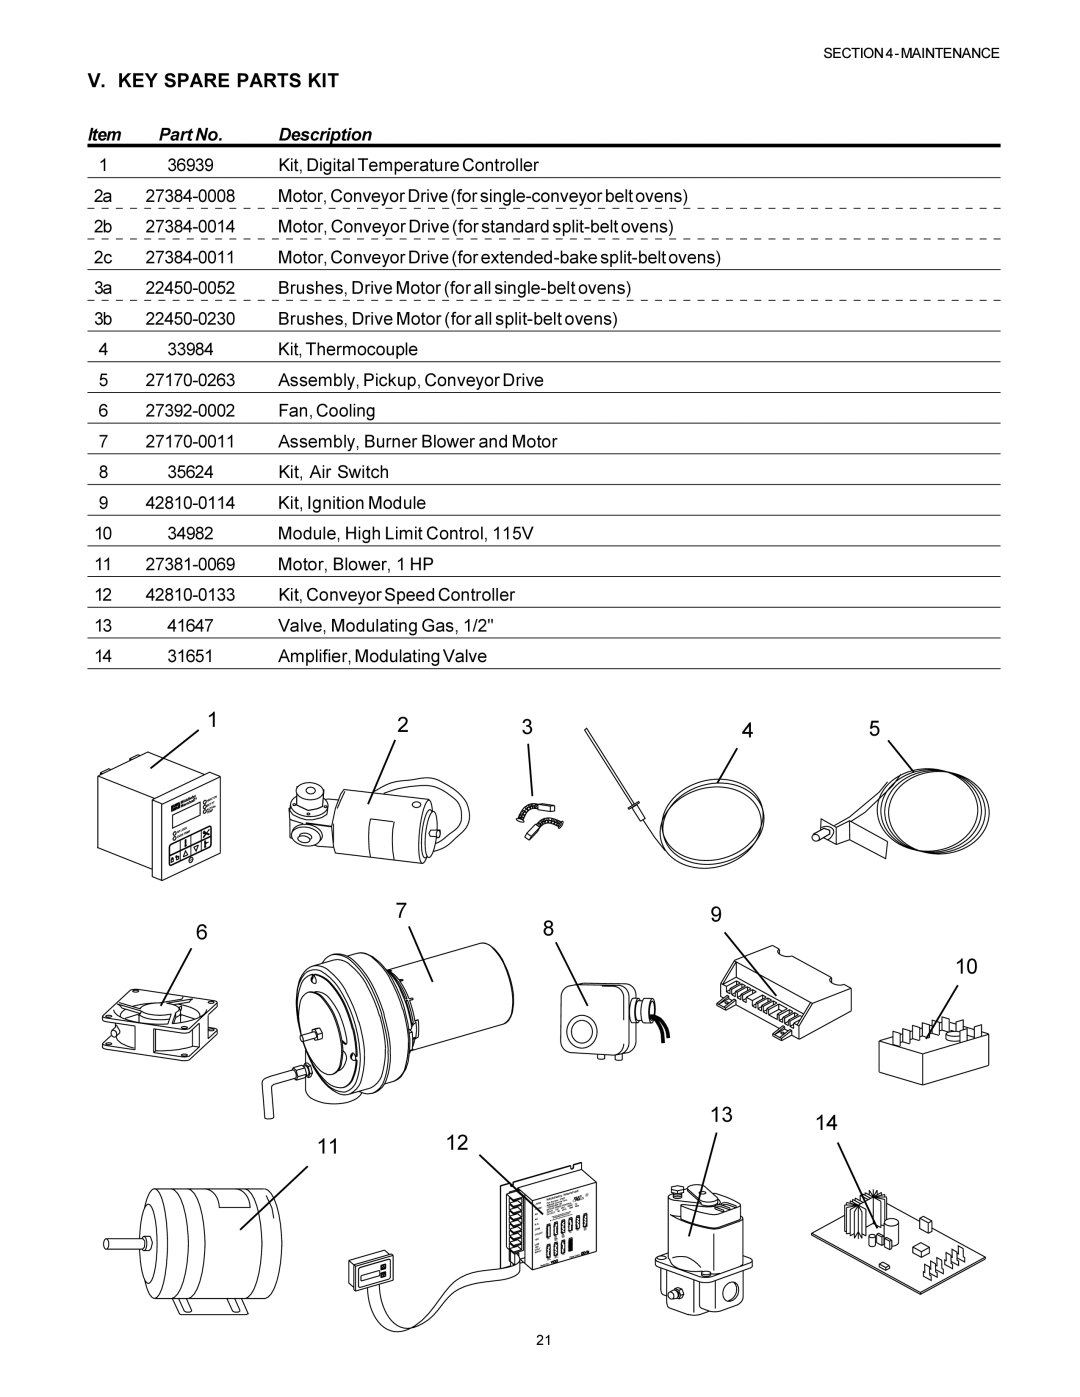 Middleby Marshall PS570S installation manual V. Key Spare Parts Kit, Description 